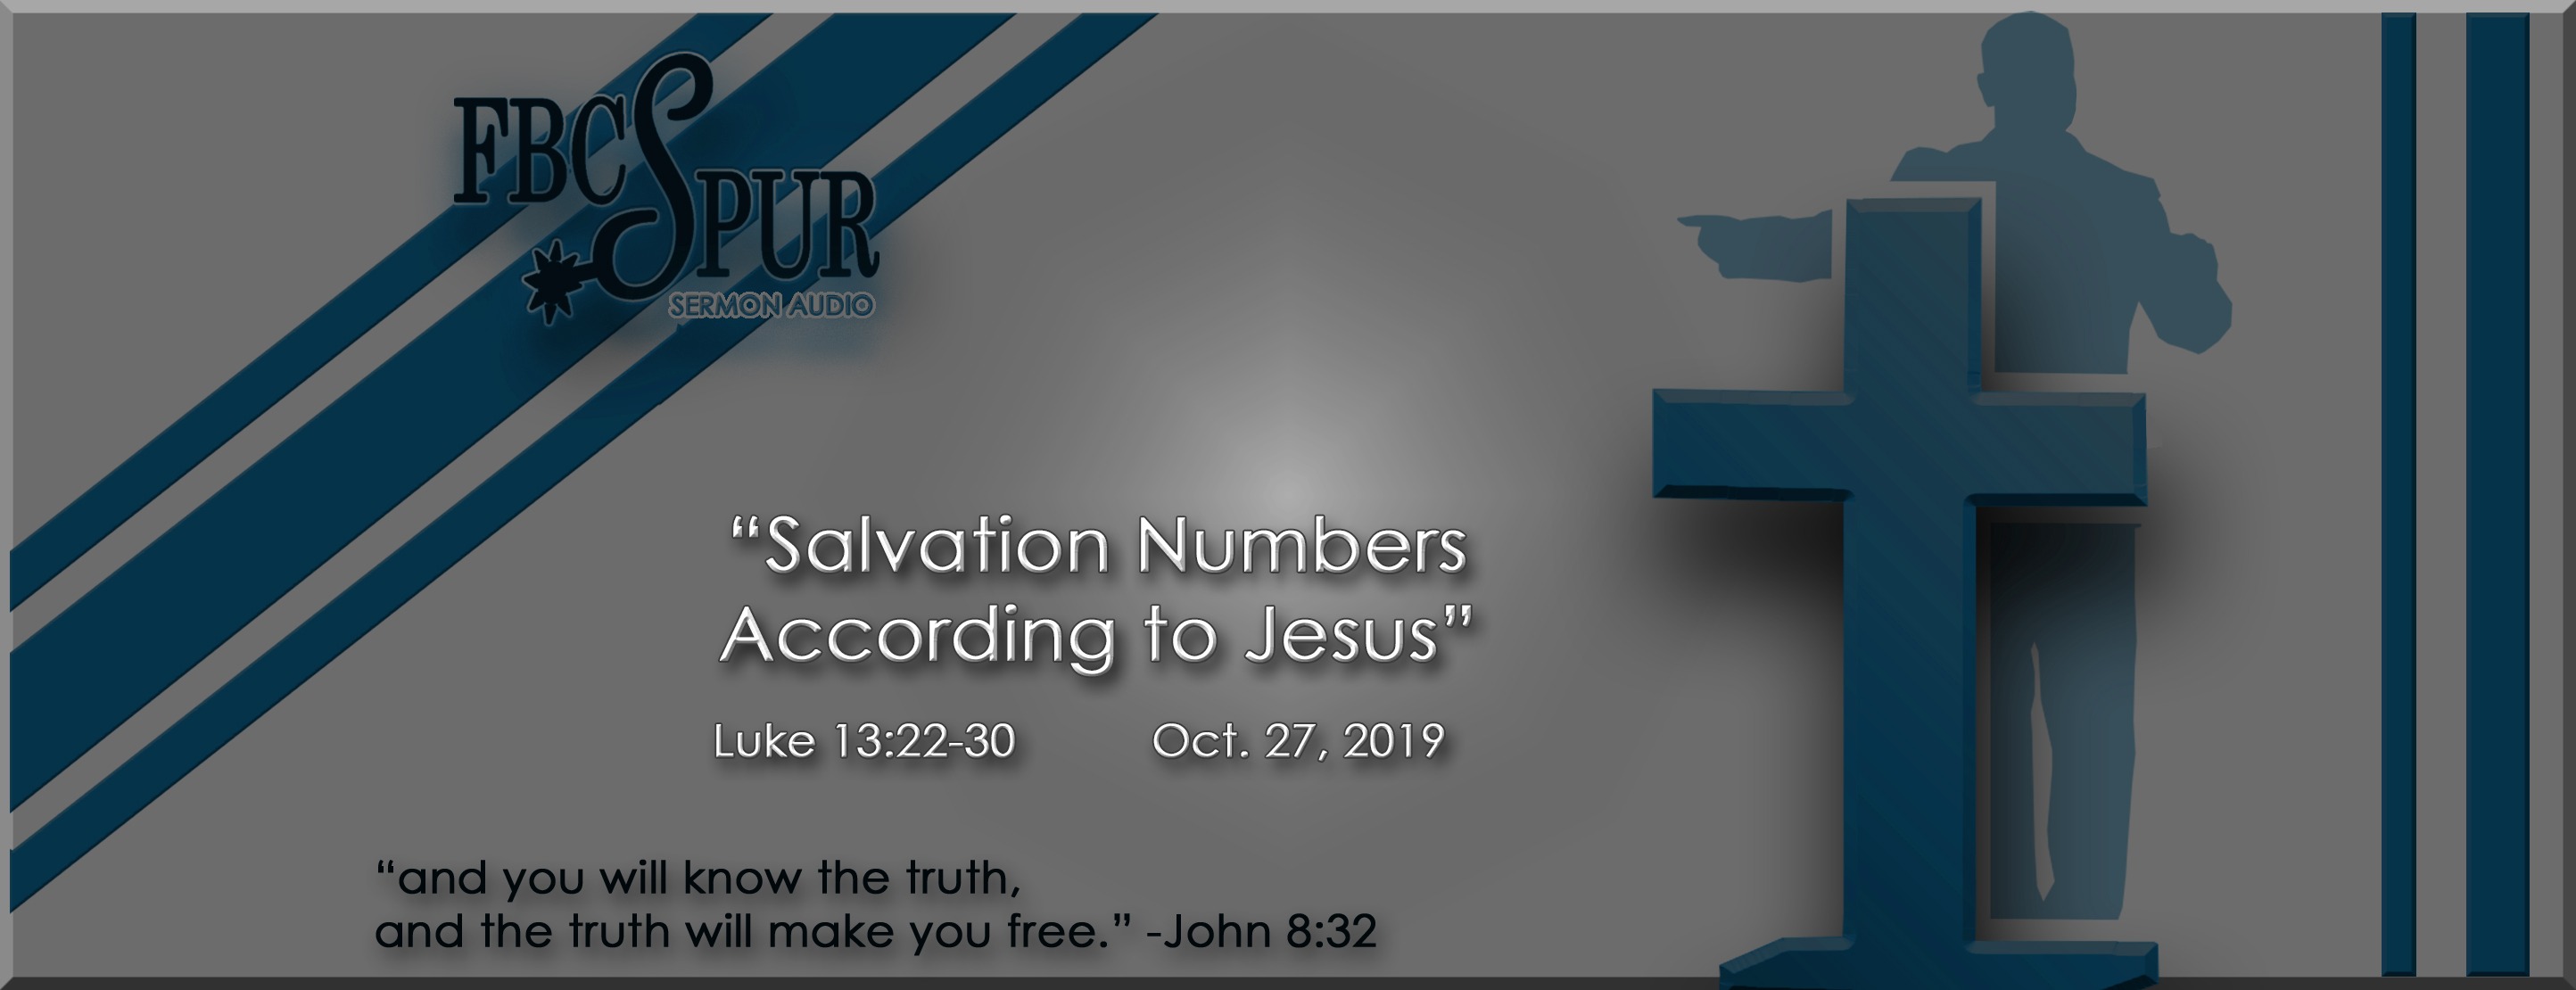 salvation-numbers-according-to-jesus-luke-13-22-30-fbc-spur